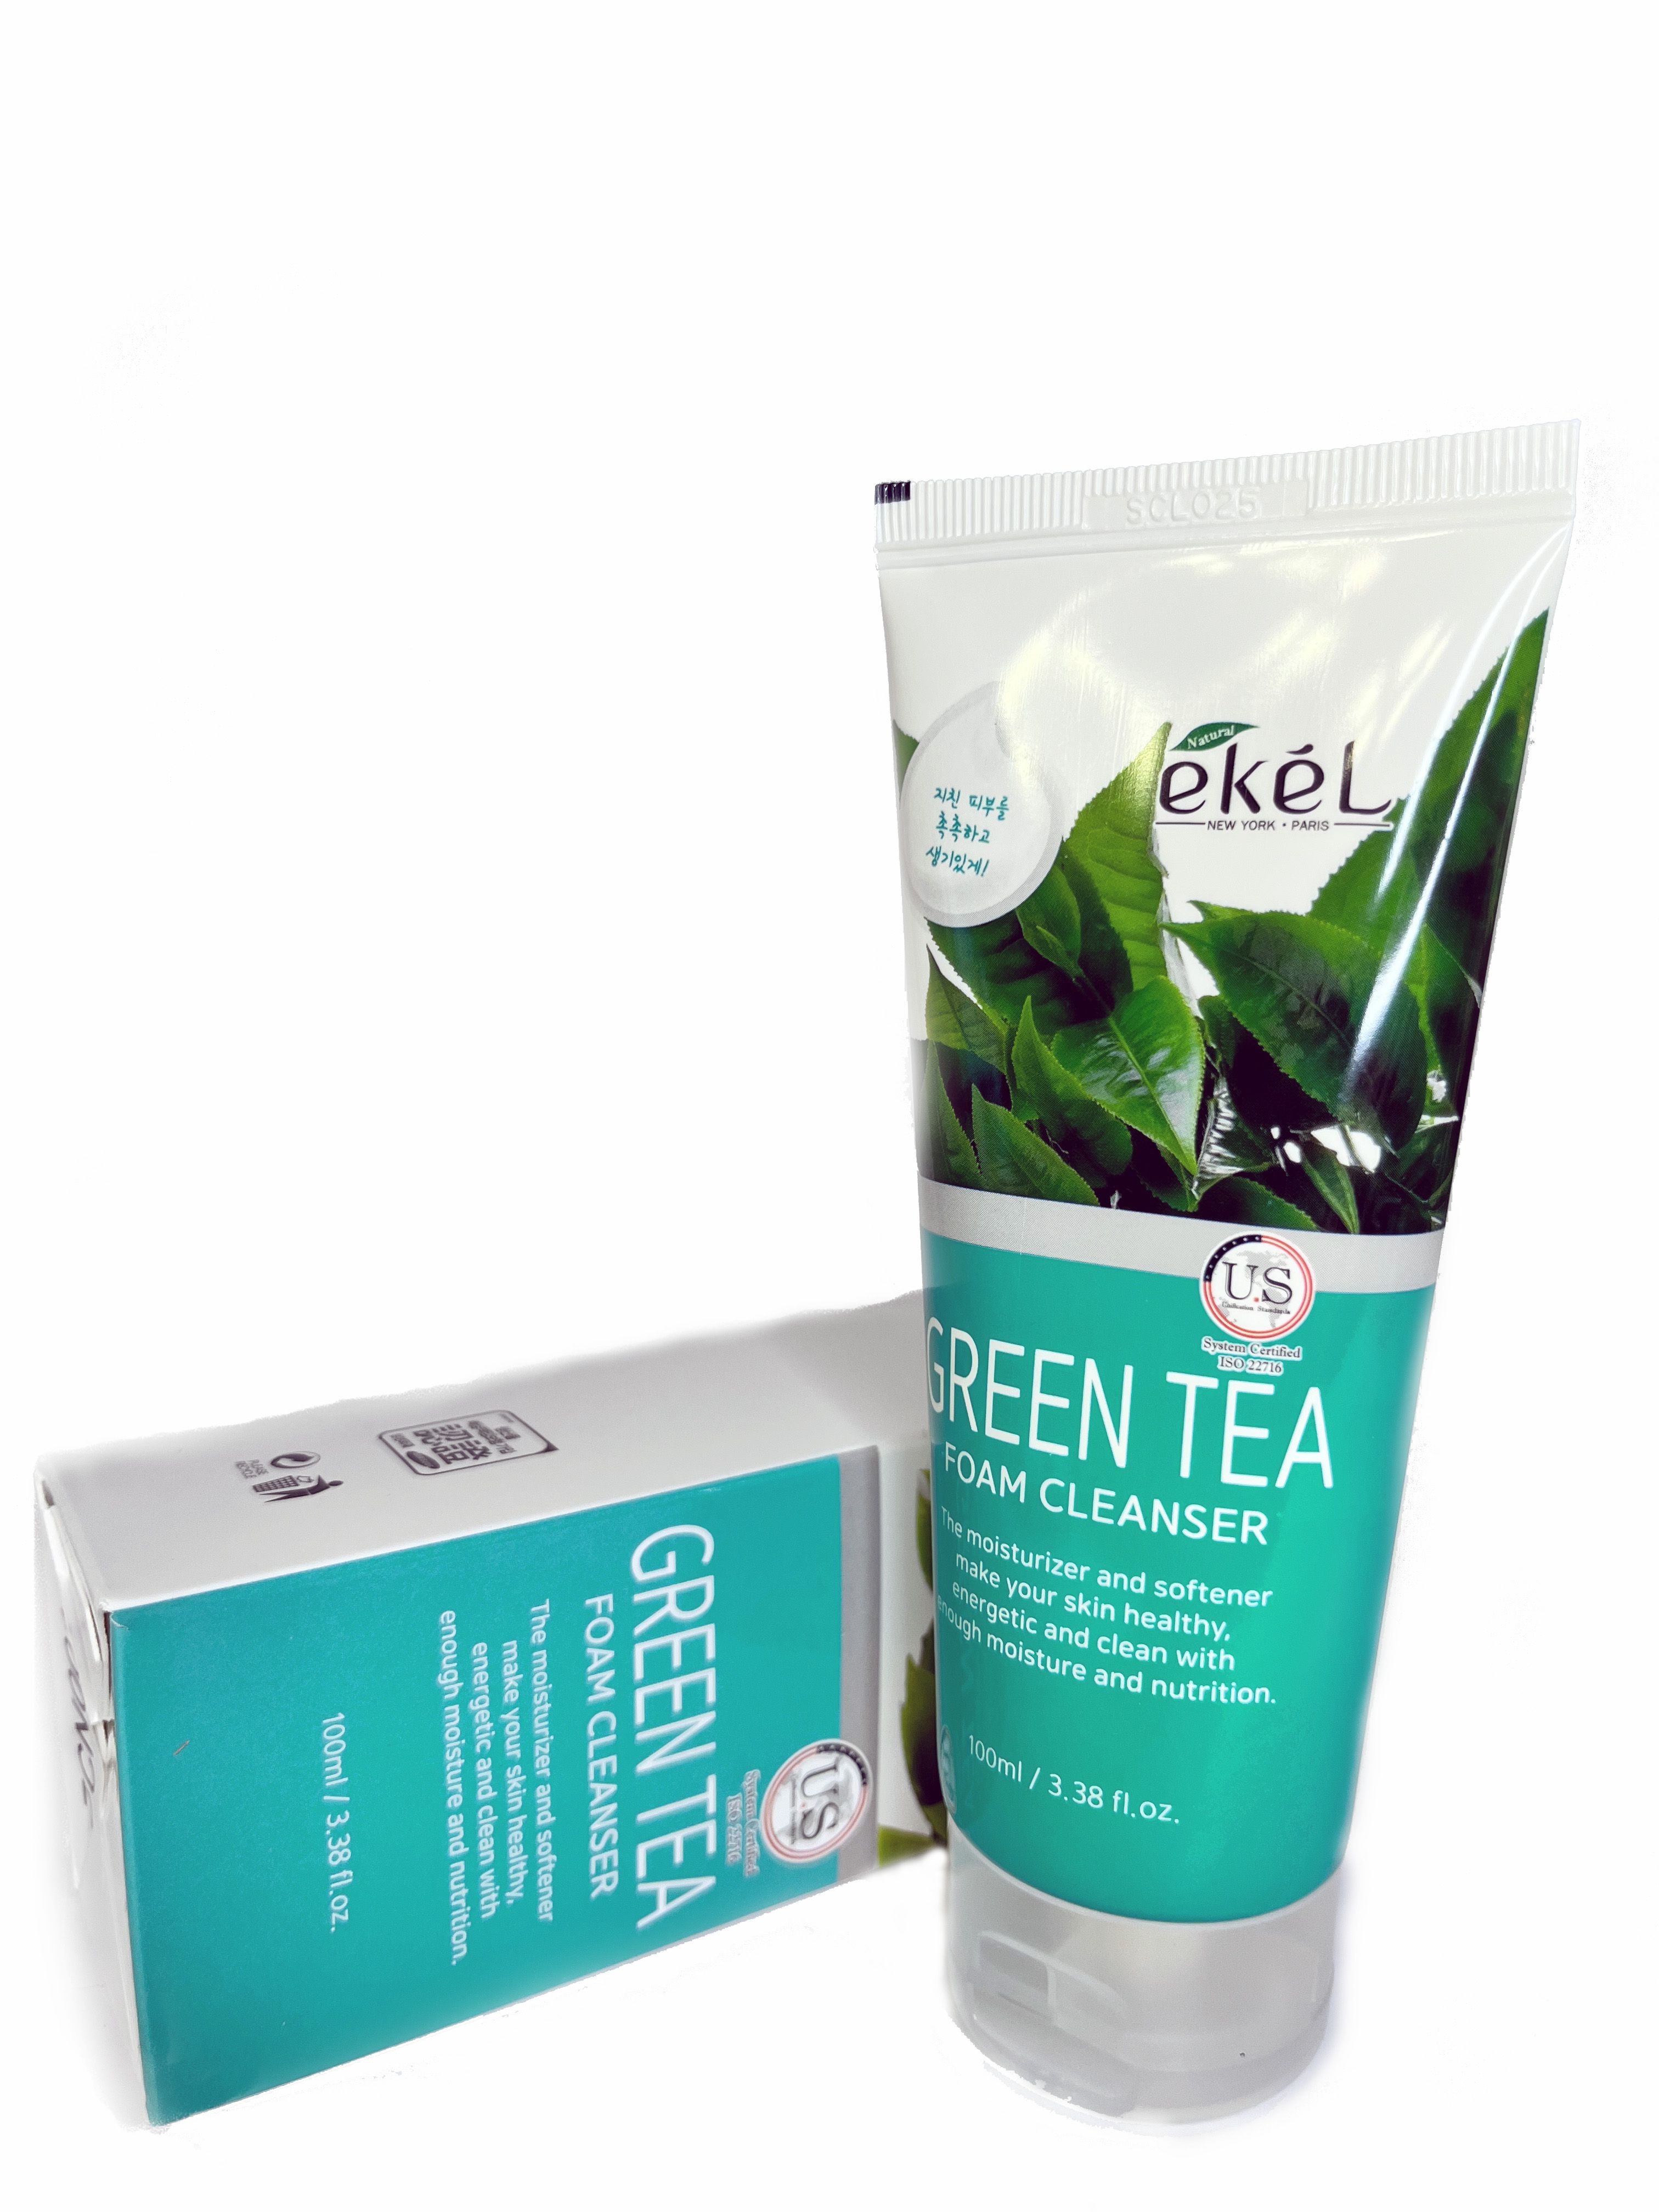 Ekel foam cleanser. Green Tea Foam Cleanser. Ekel Foam Cleanser зеленый чай. Корейская пенка для умывания зеленая упаковка. Картинка Ekel Foam Cleanser Green Tea.